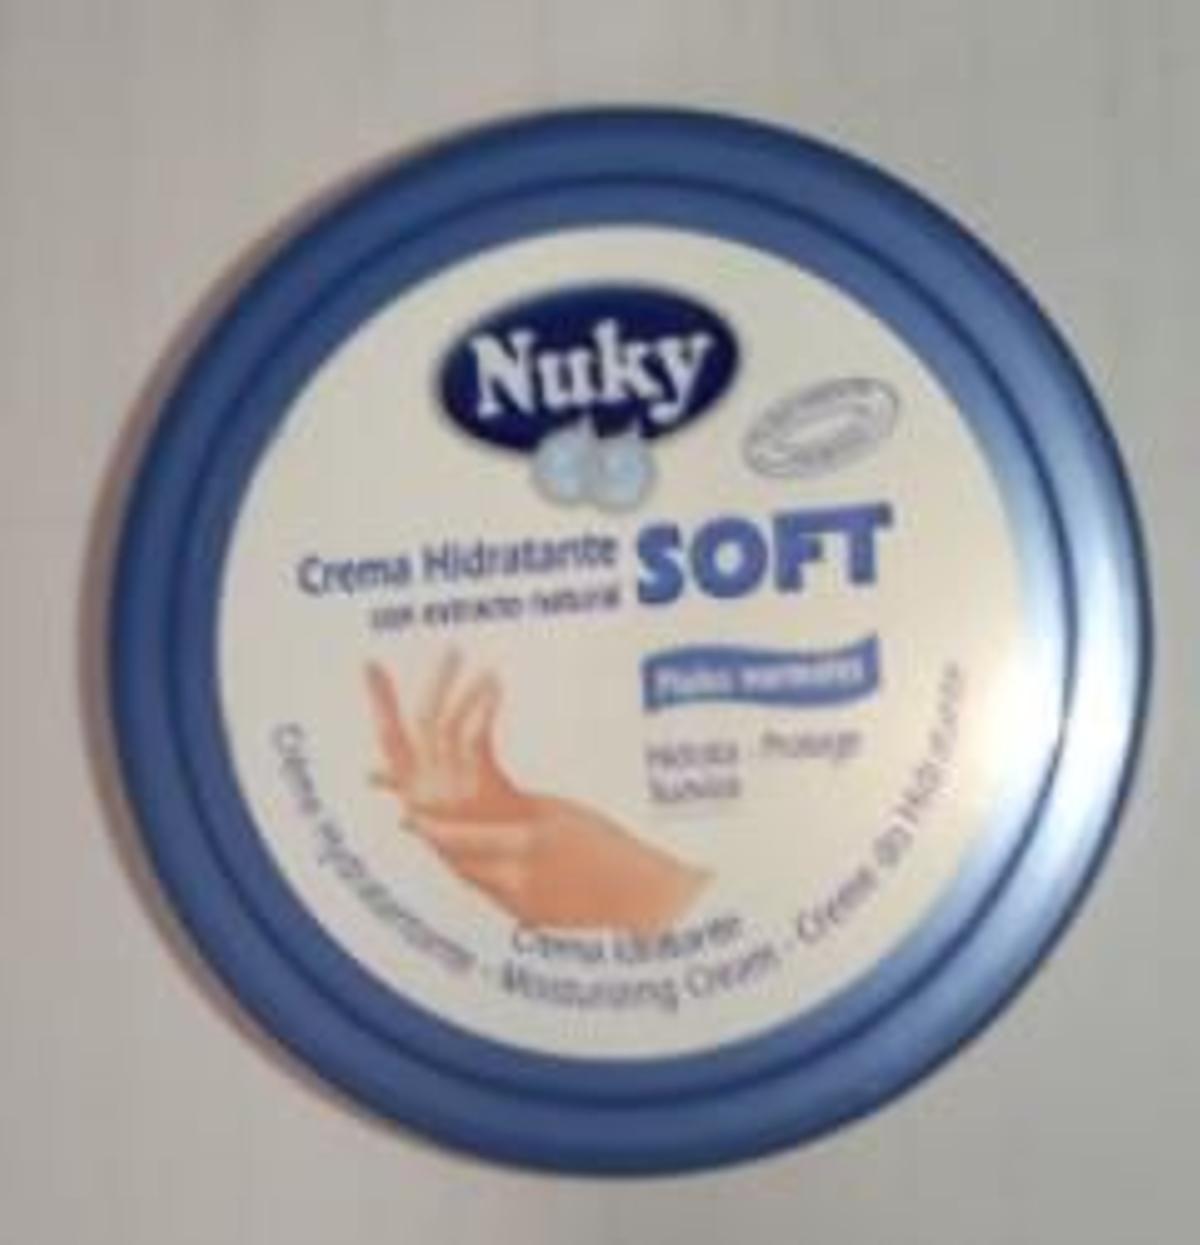 Crema hidratant Nuky Soft.